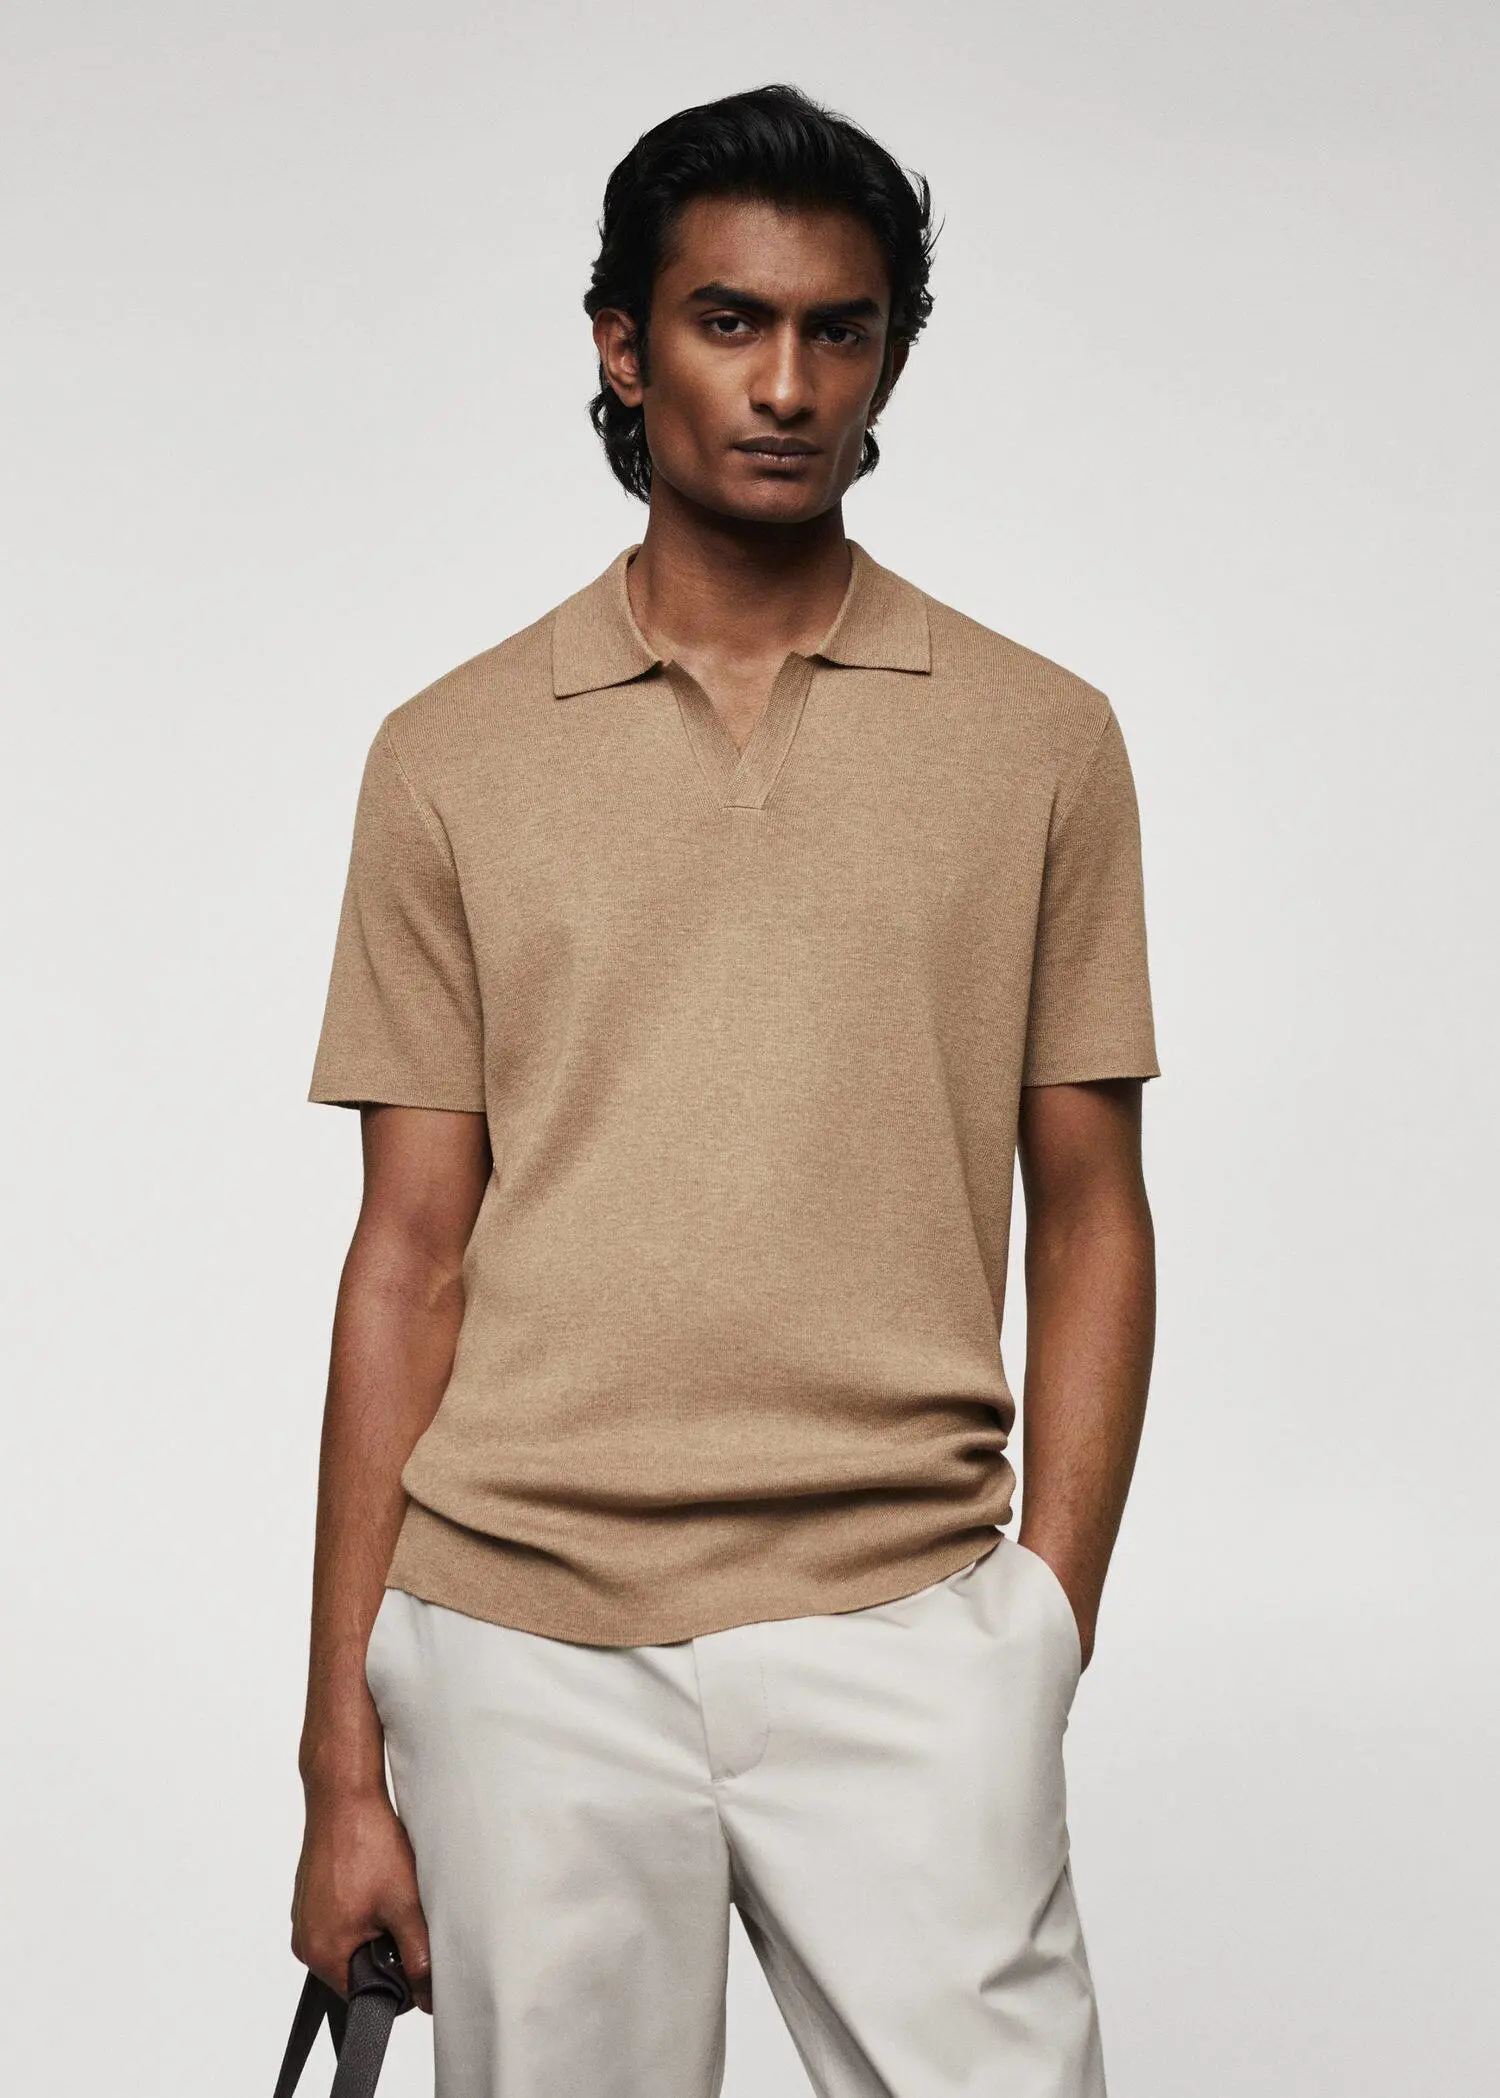 Mango Fine-knit polo shirt. a man in a tan polo shirt and white pants. 